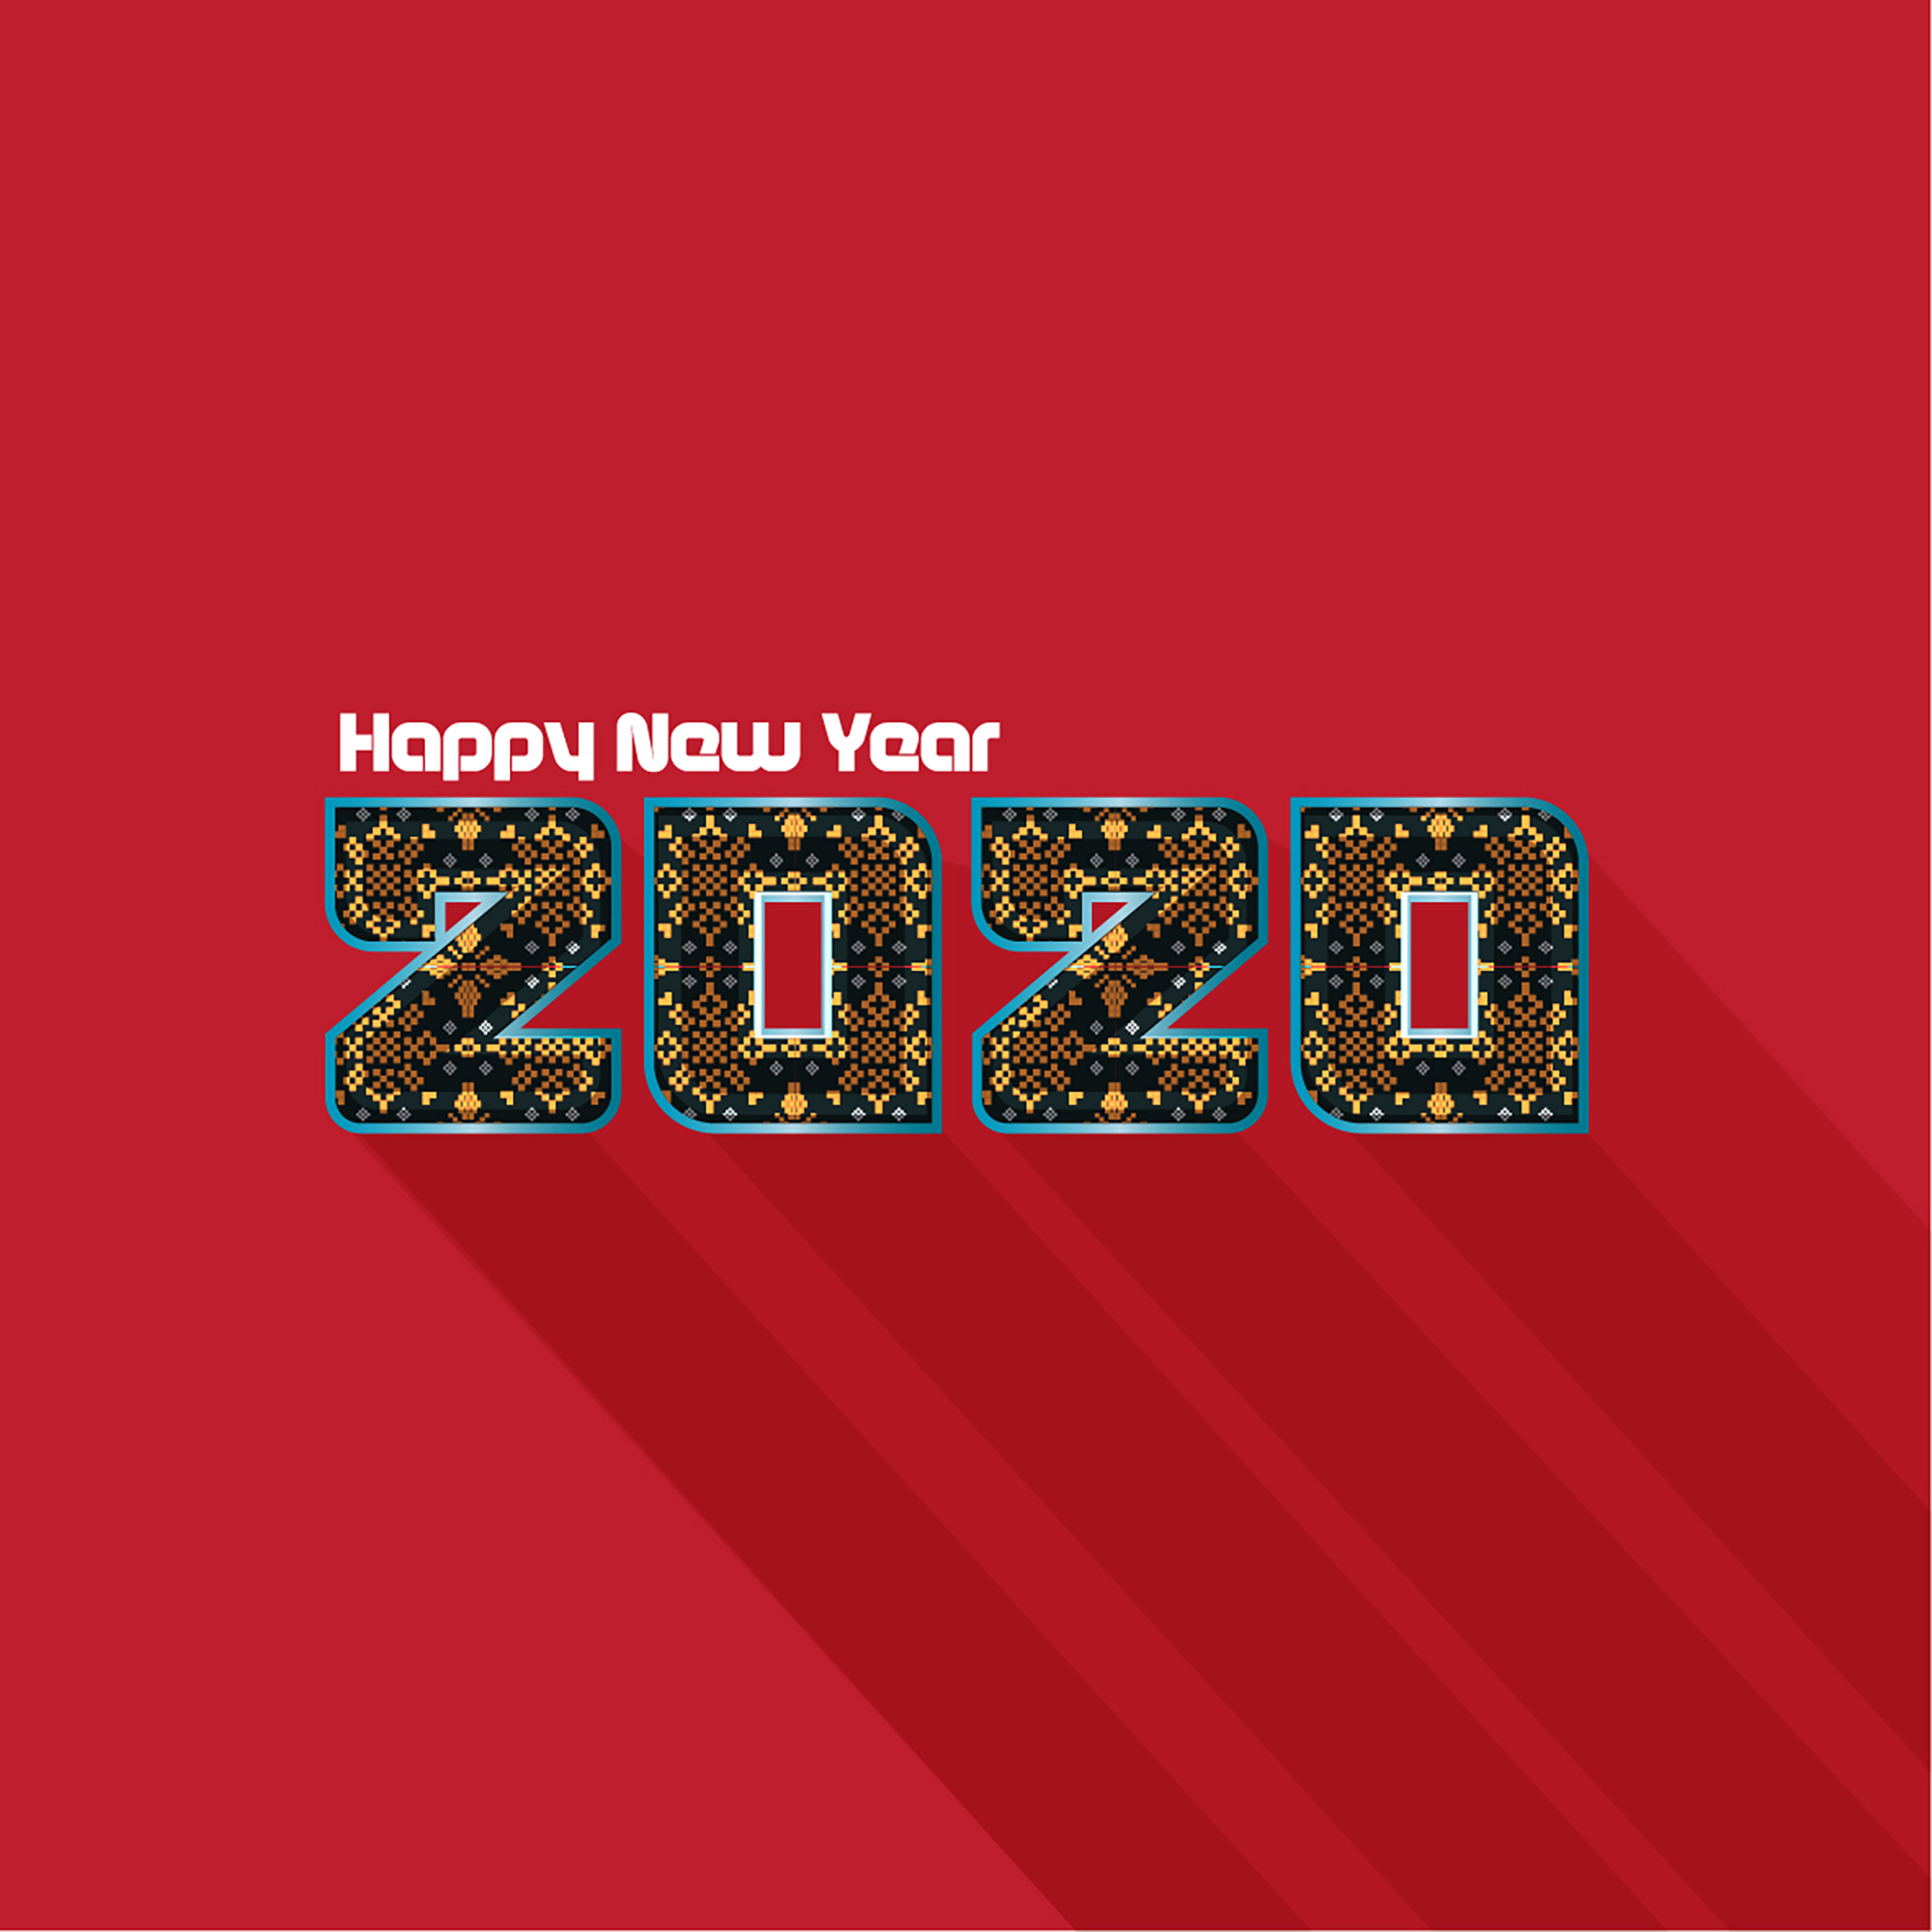 happy new year 2020 vector design